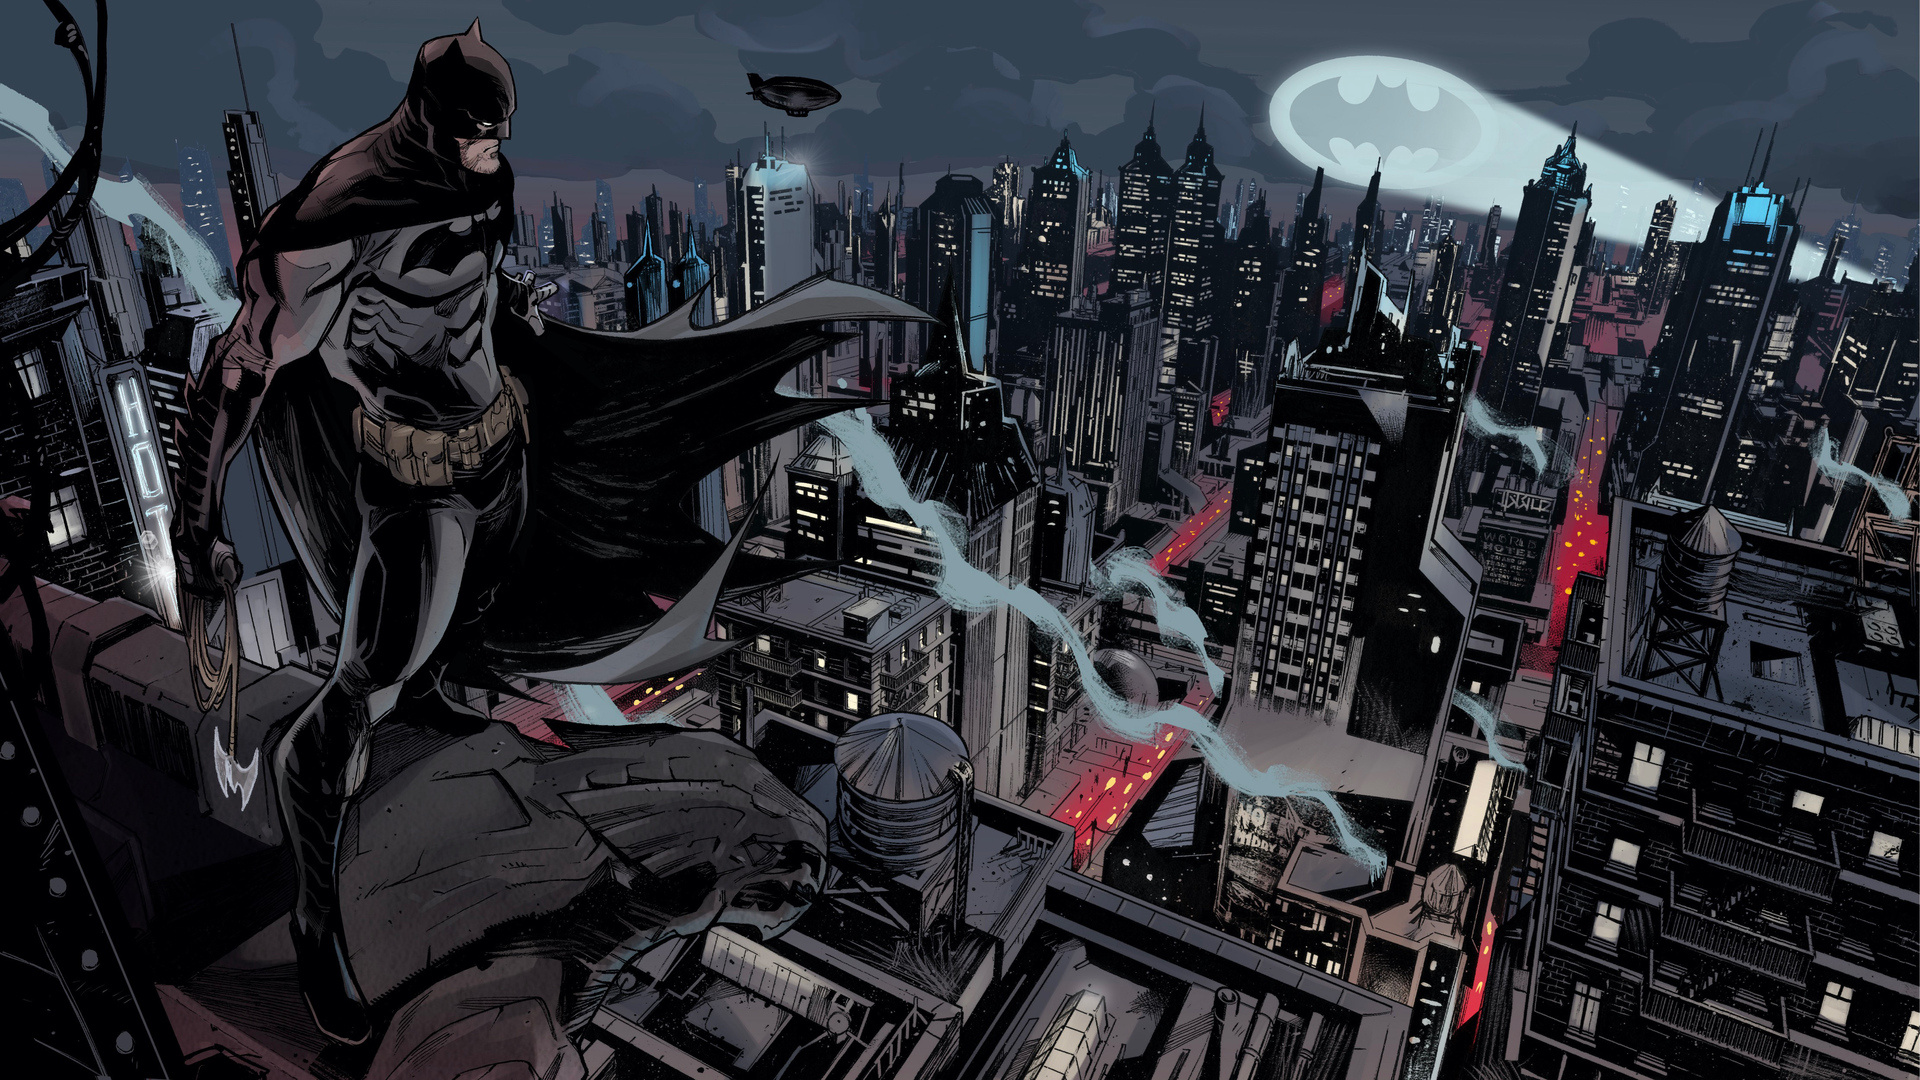 Bat-signal over Gotham, Comic noir aesthetic, City's saviour, Iconic Batman, DC Comics, 1920x1080 Full HD Desktop